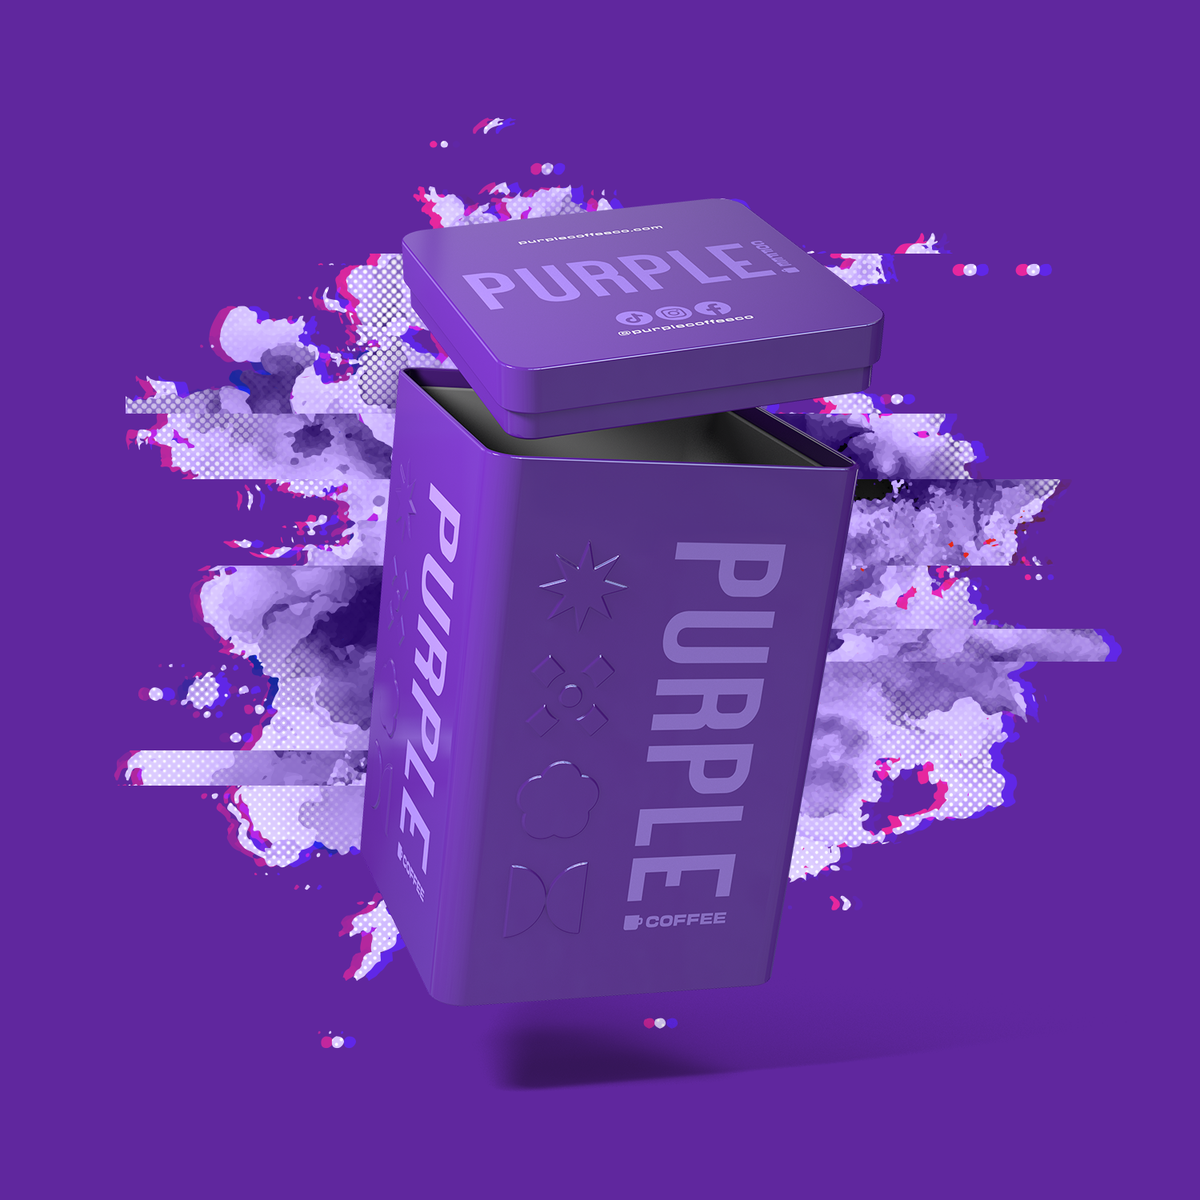 The Purple Tin